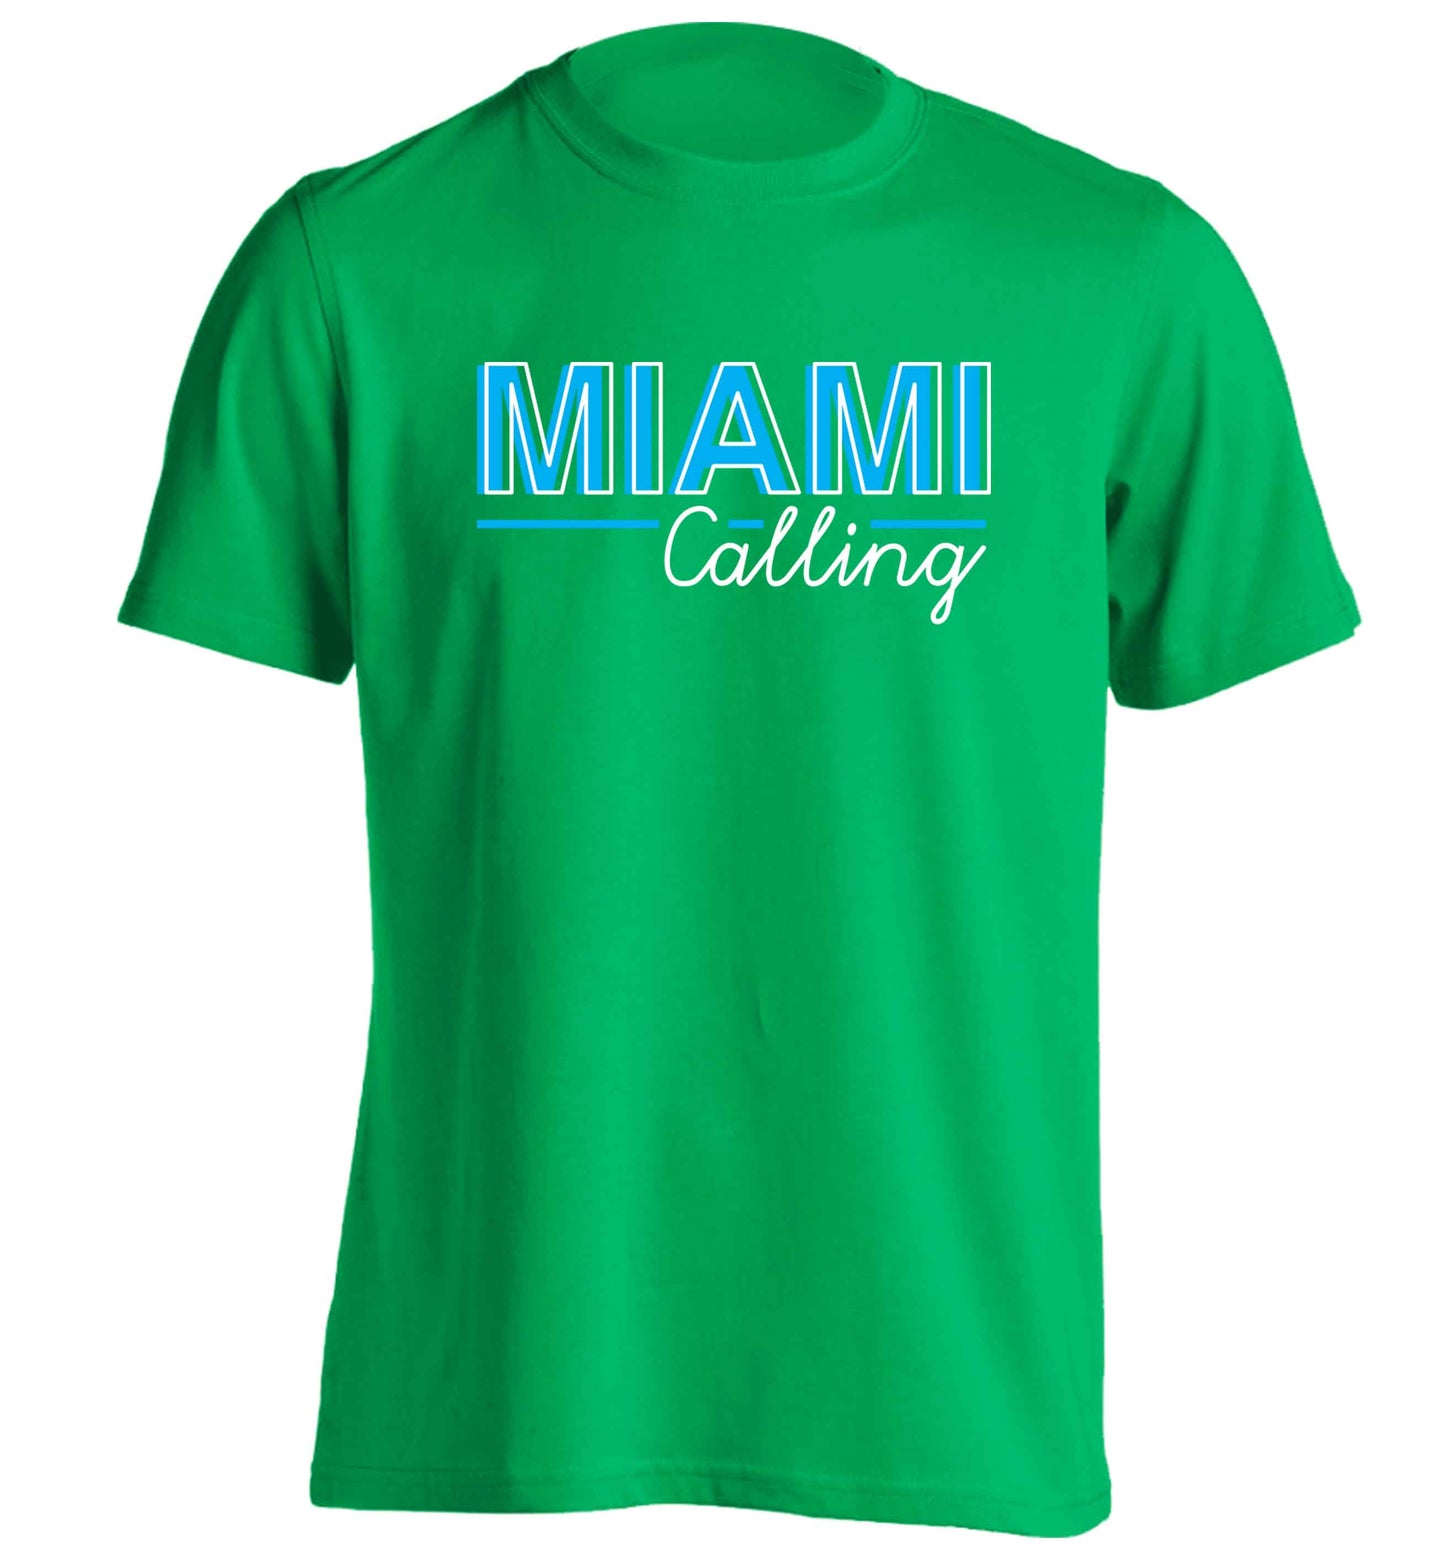 Miami calling adults unisex green Tshirt 2XL